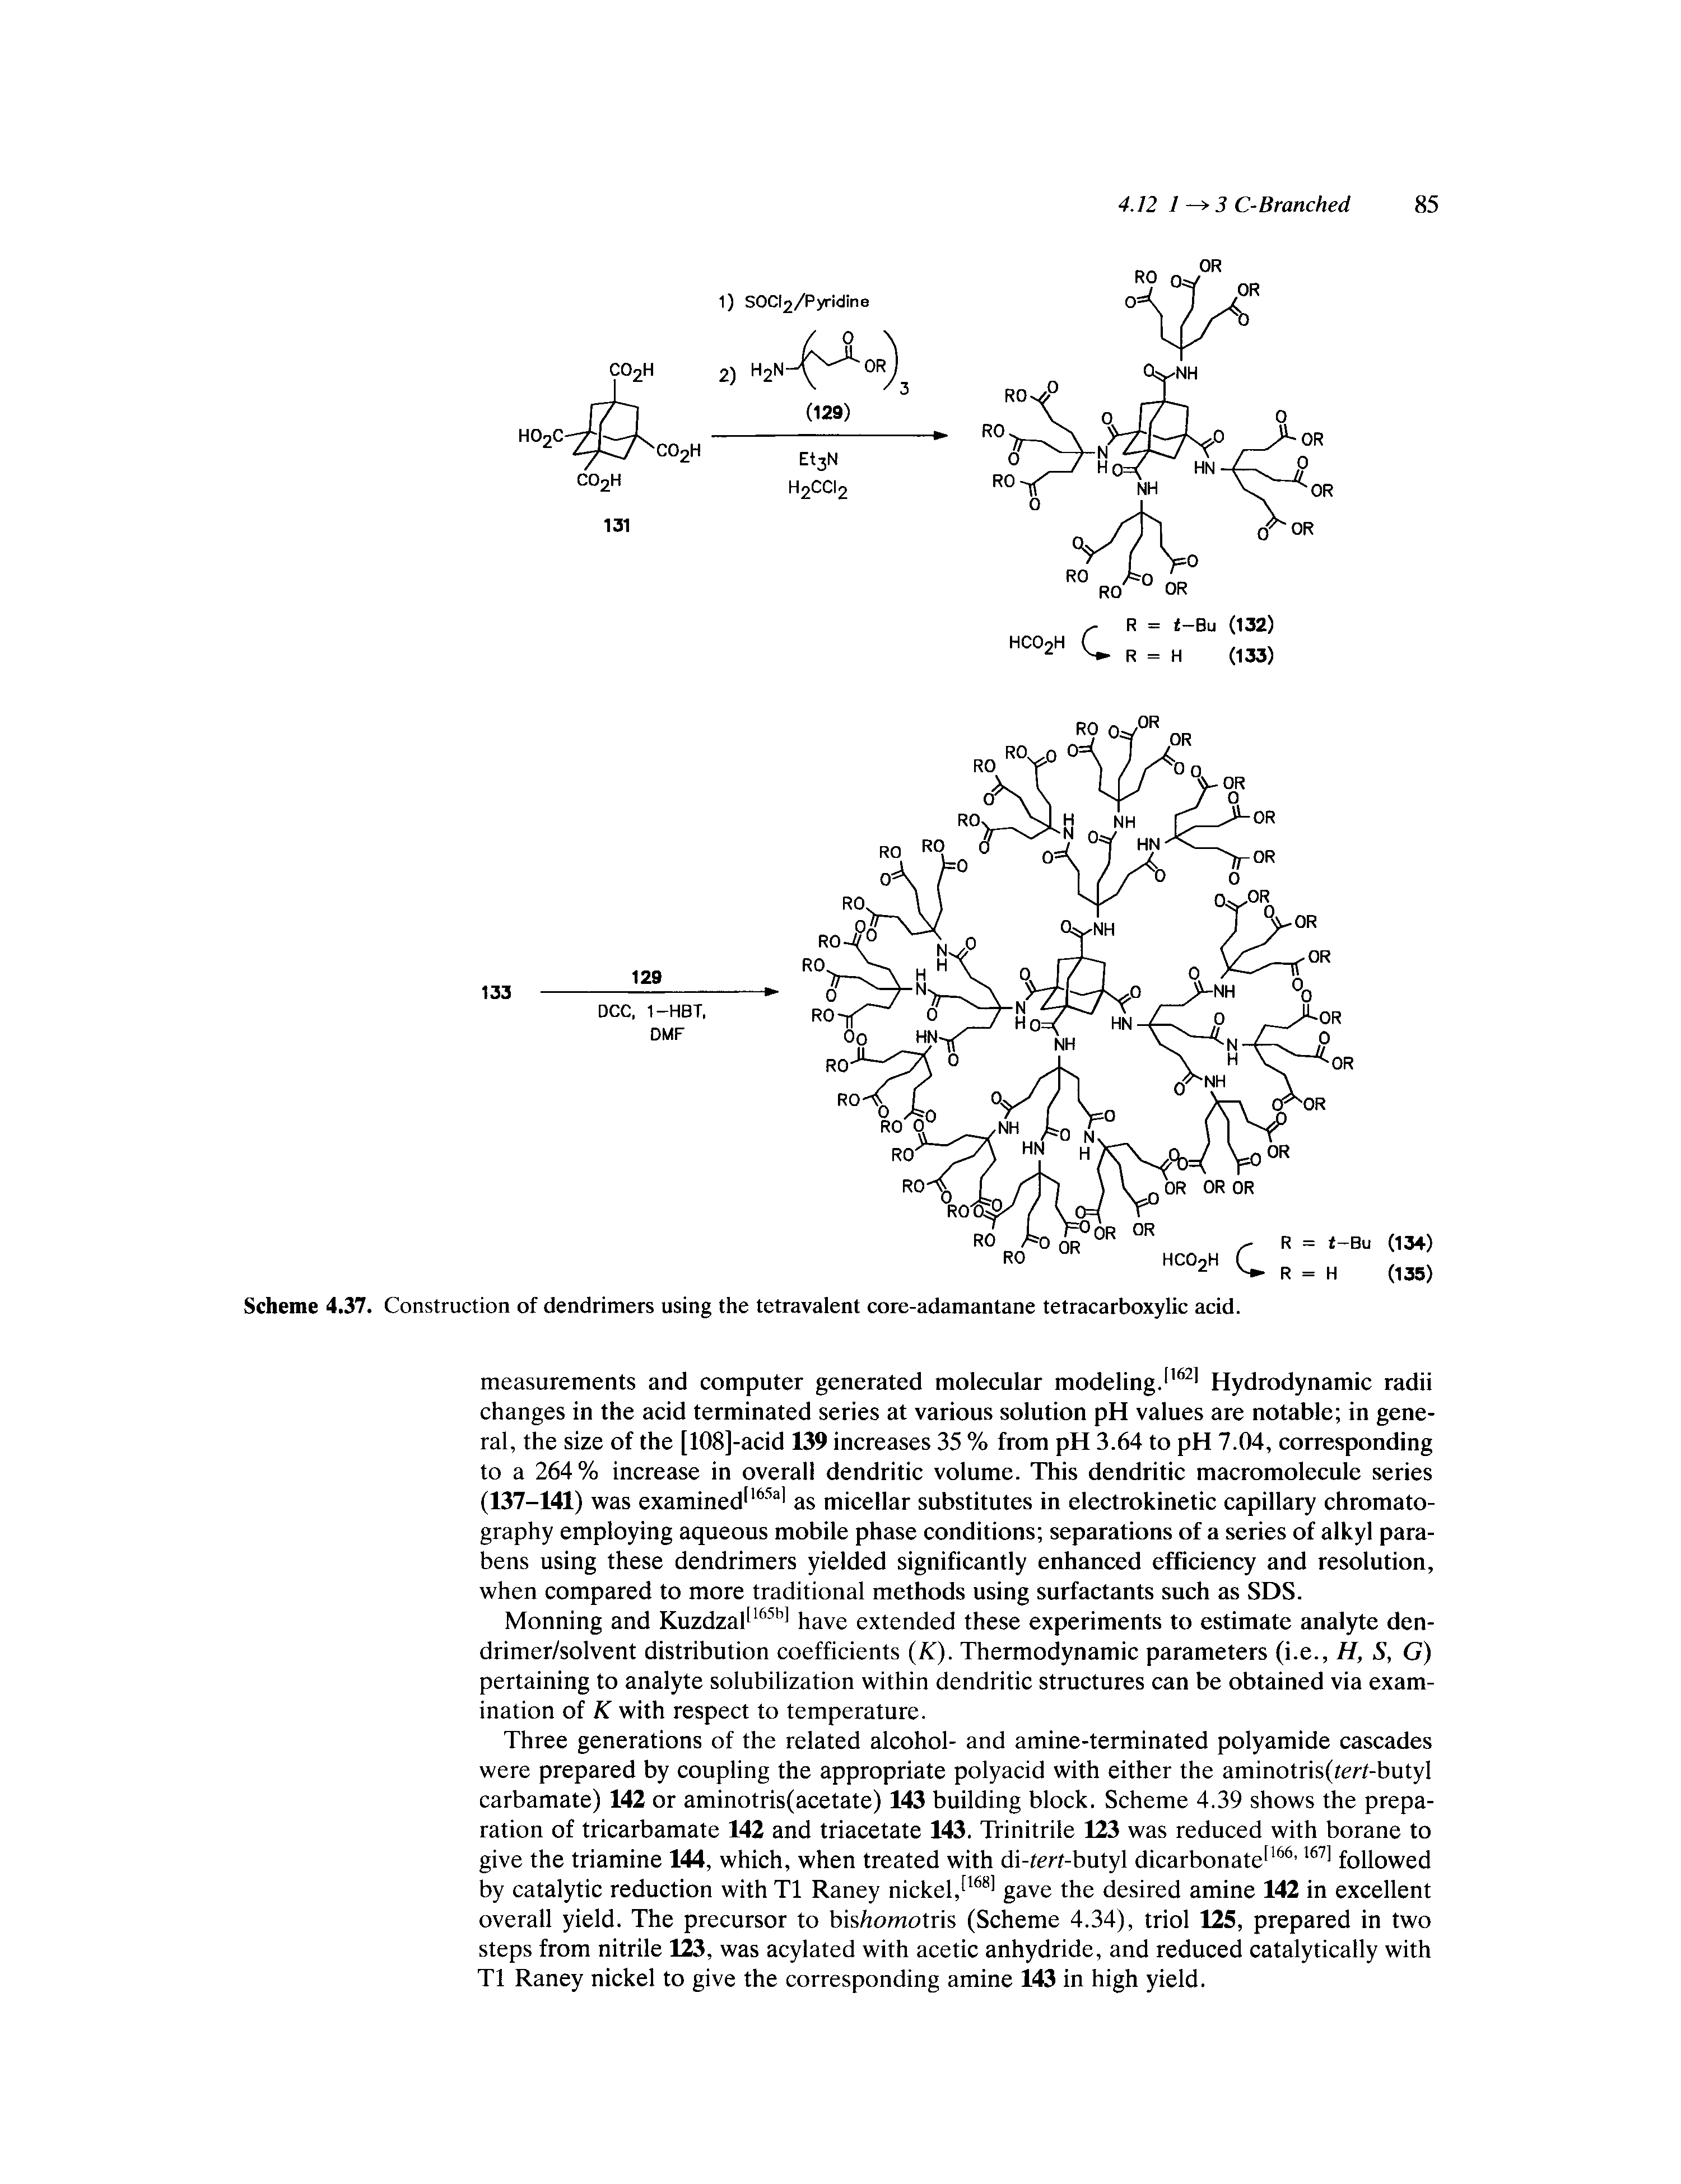 Scheme 4.37. Construction of dendrimers using the tetravalent core-adamantane tetracarboxylic acid.